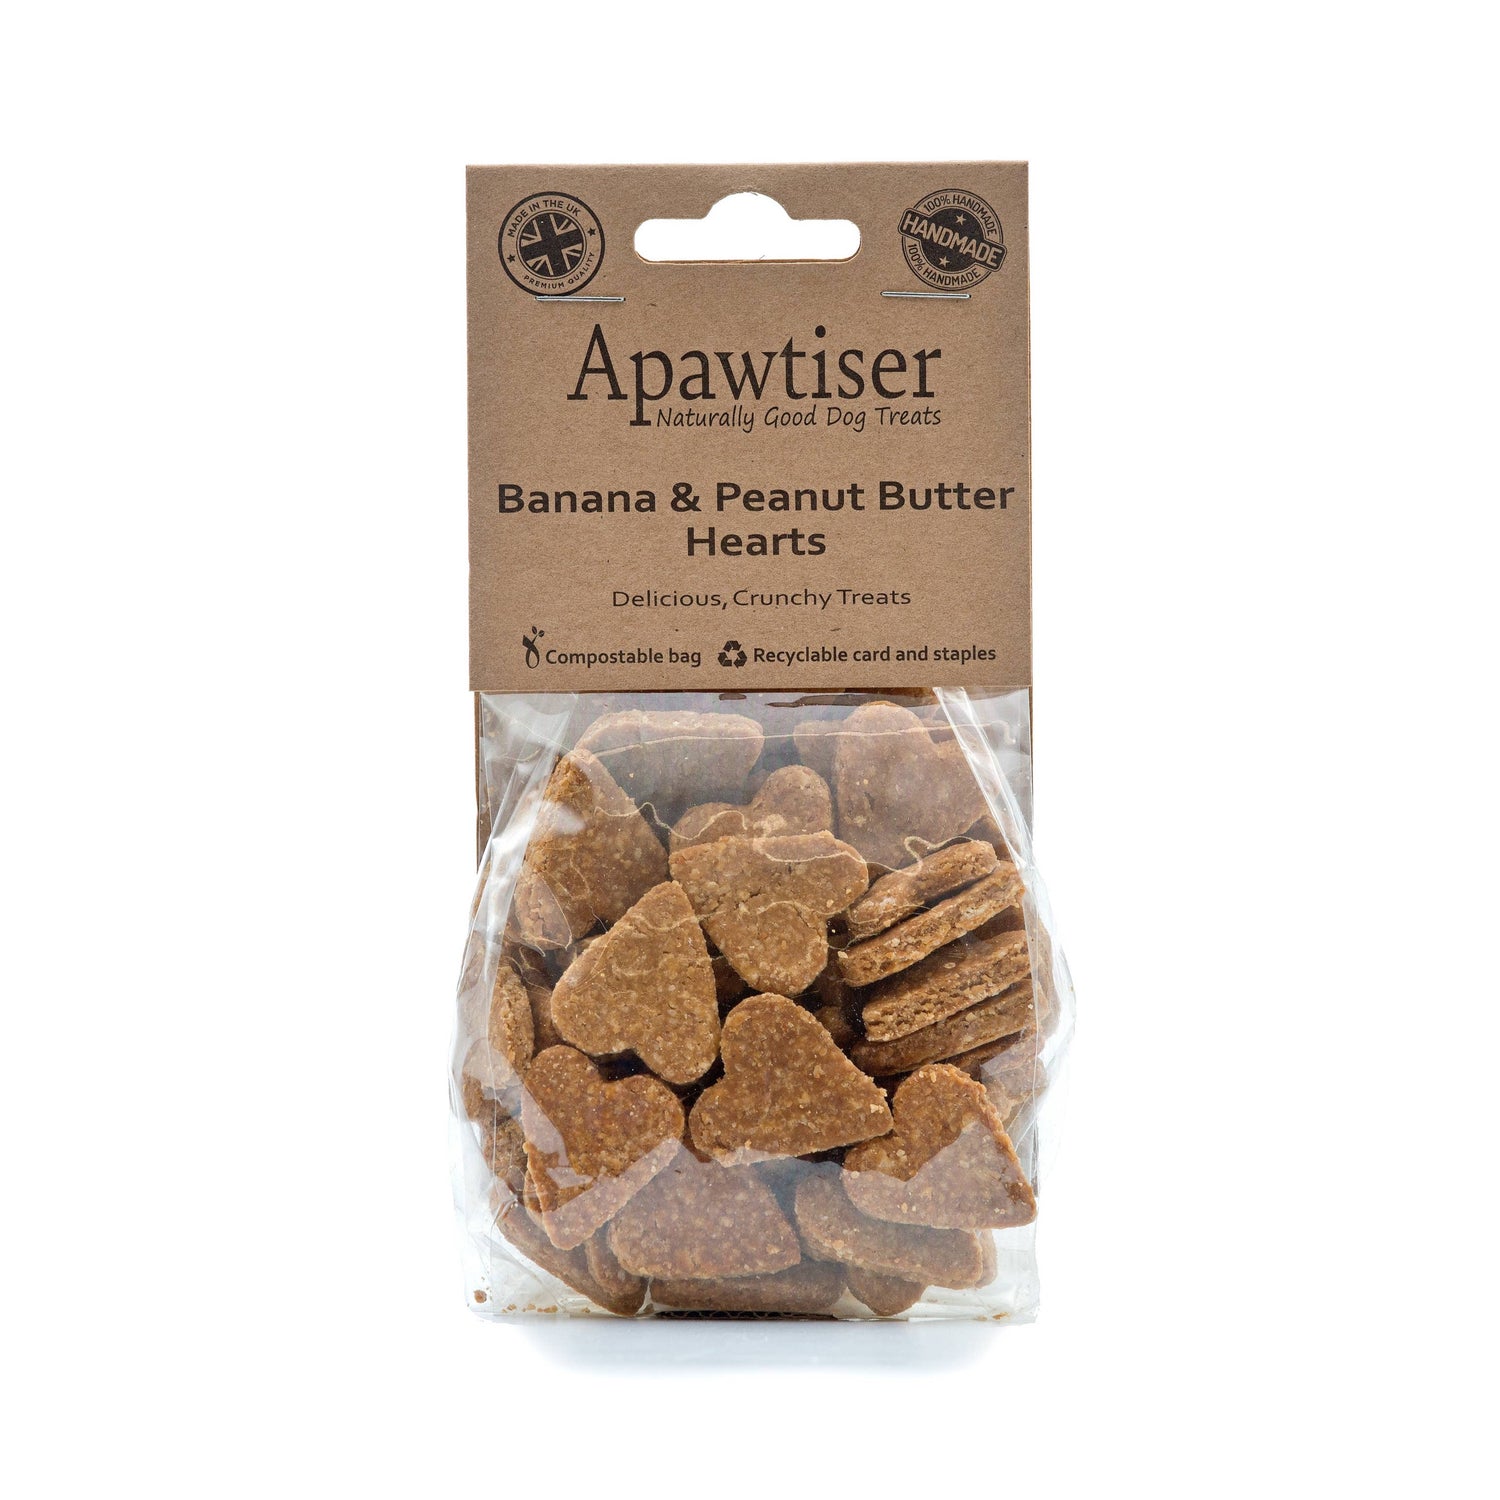 Apawtiser Banana & Peanut Butter Hearts 100g - Dog Treats